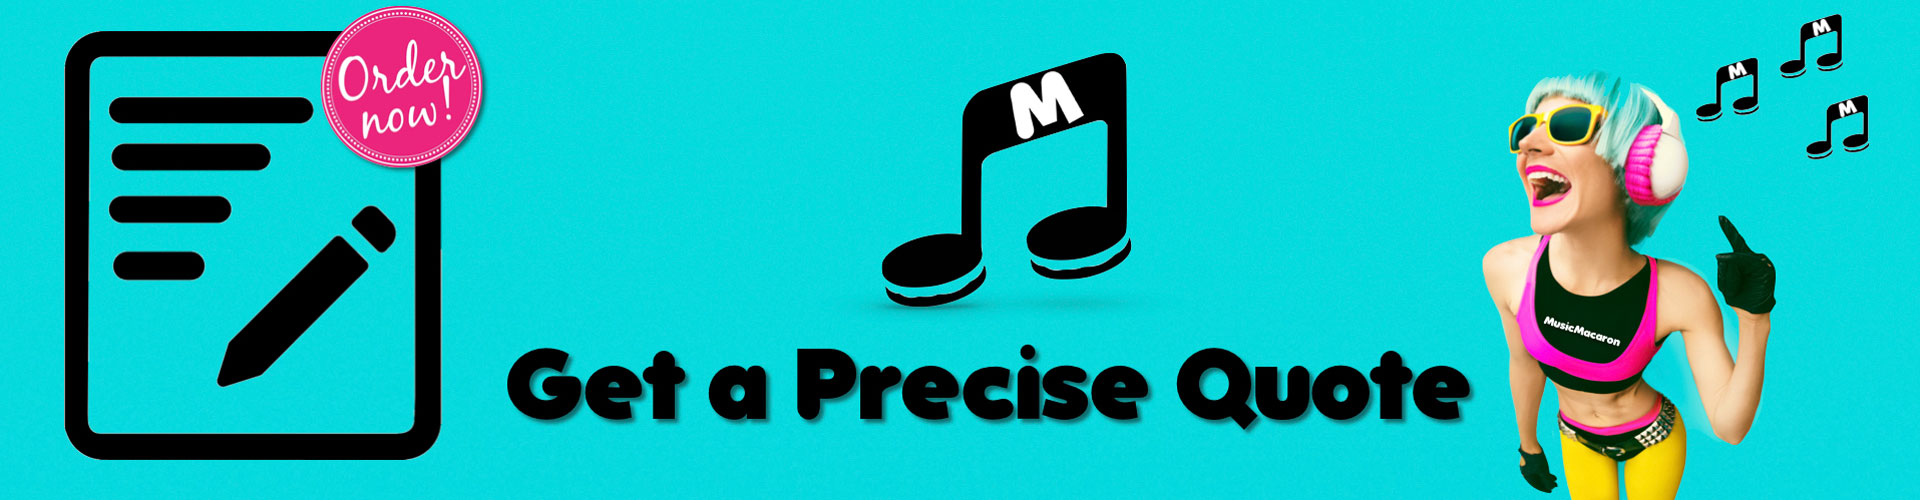 Get a Precise Quote - Music Macaron